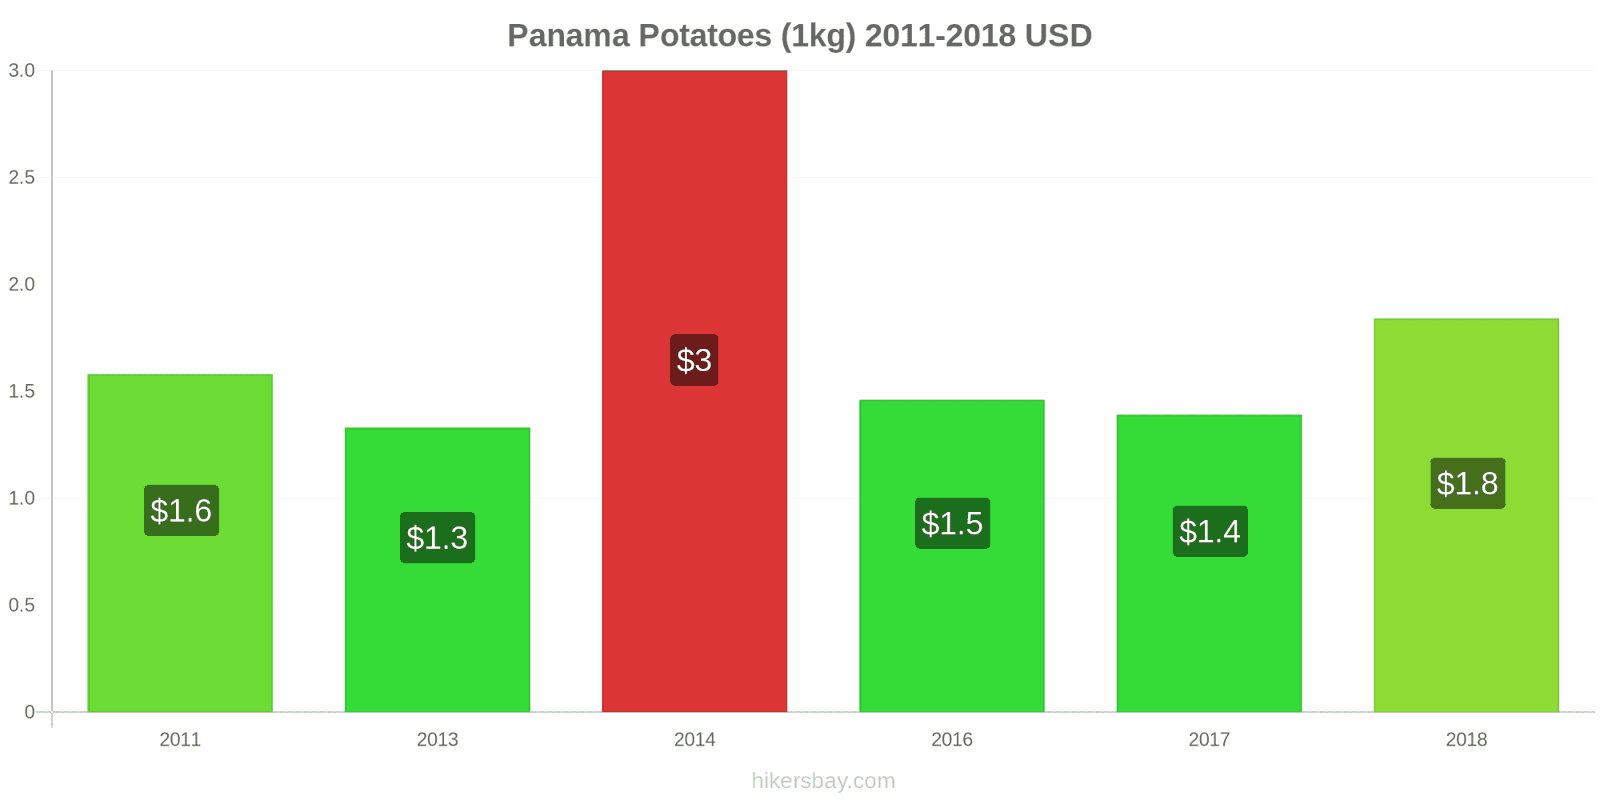 Panama price changes Potatoes (1kg) hikersbay.com